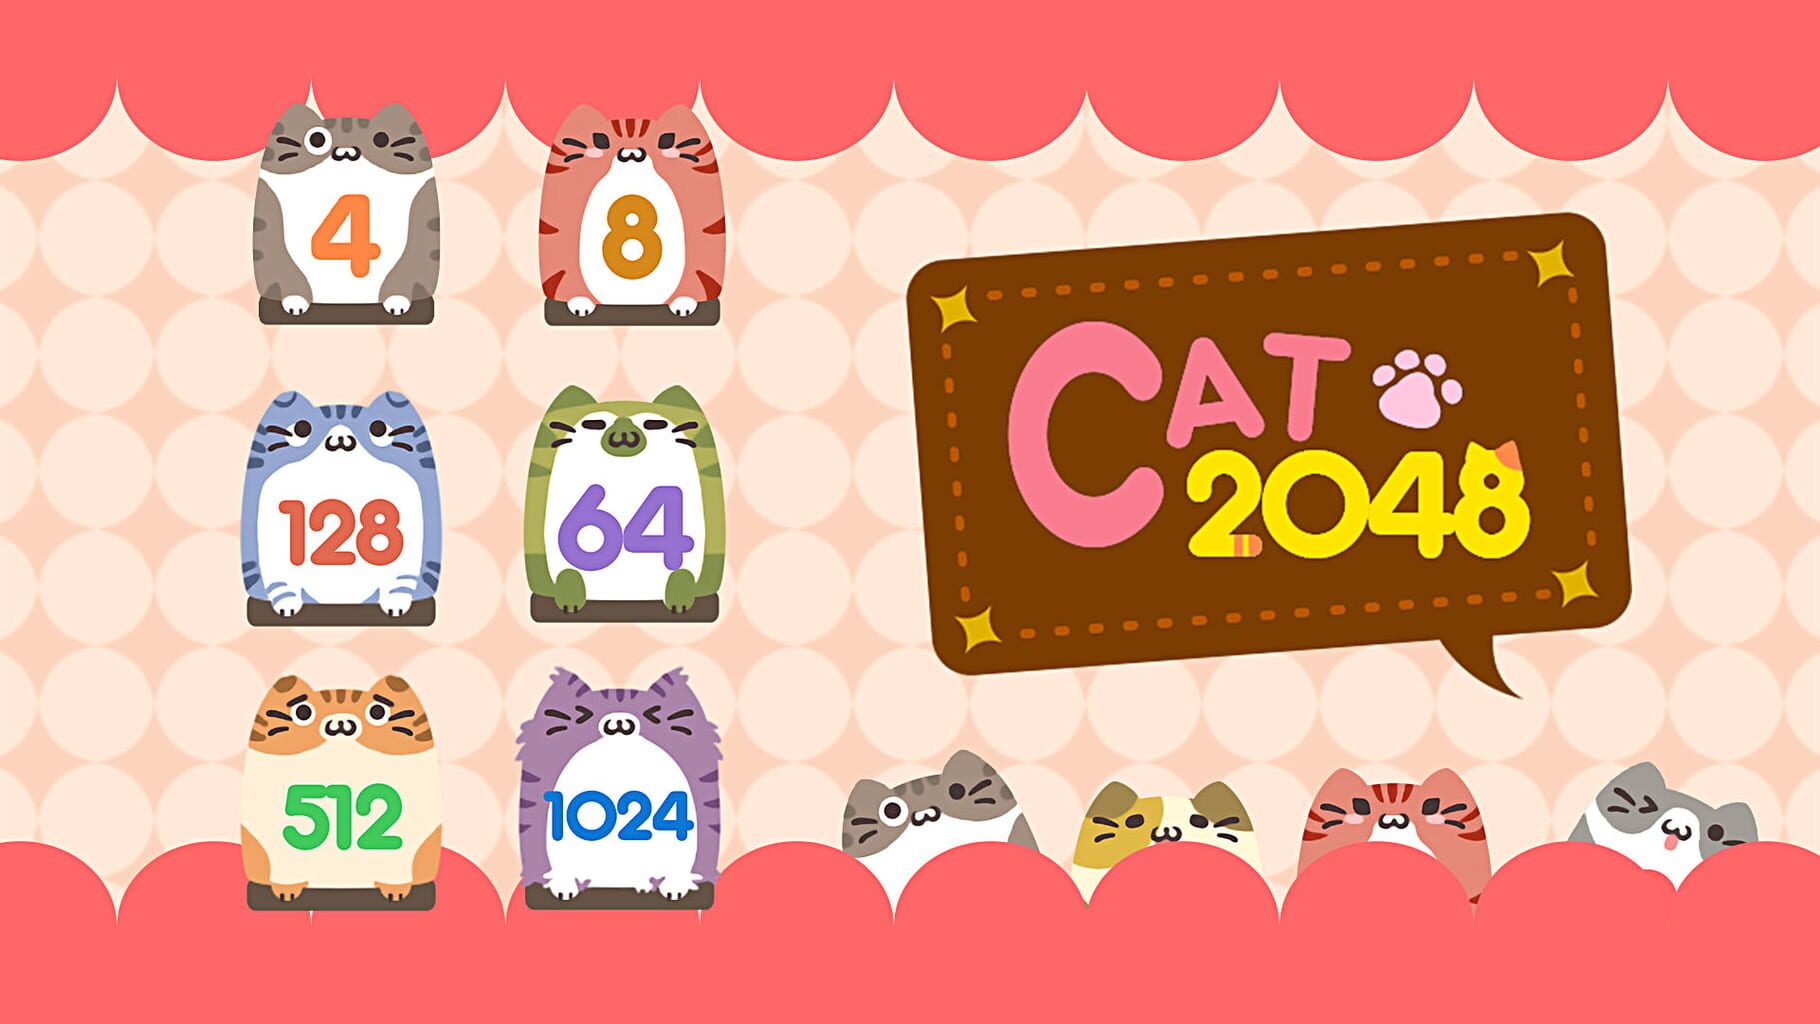 2048 Cat artwork